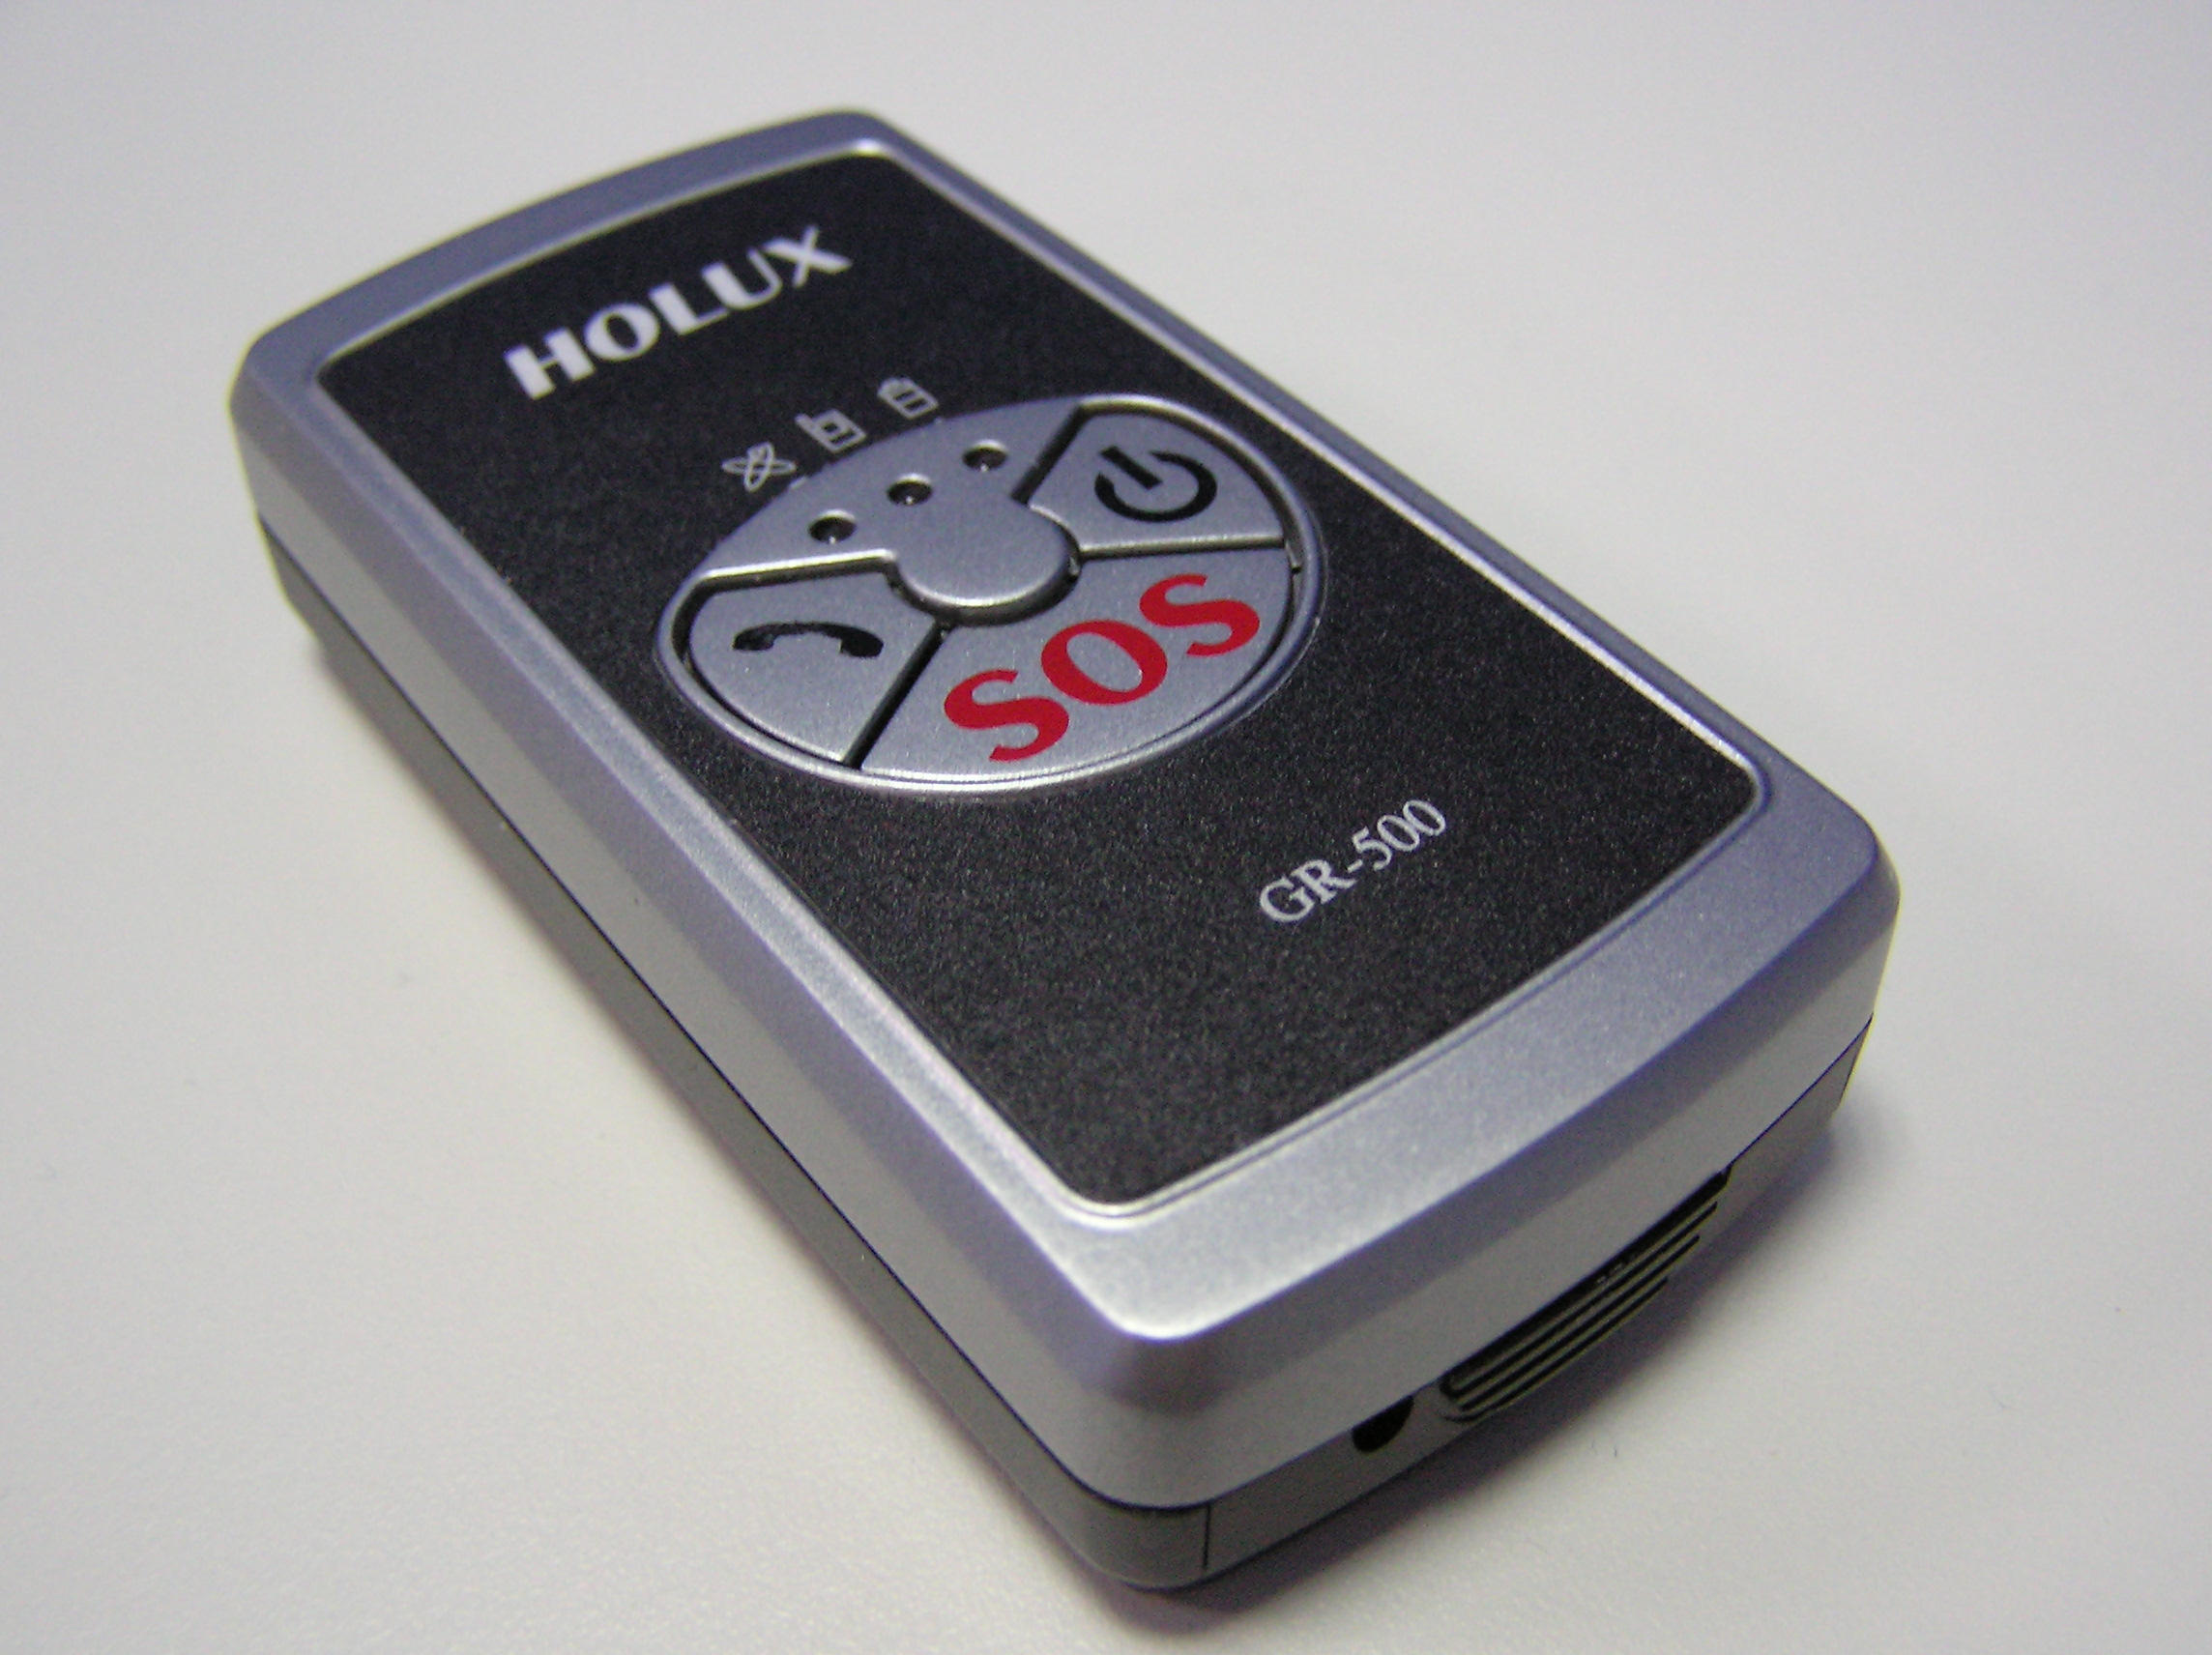 GR-500 Handheld GPS Tracker (GR-500 Handheld GPS Tr ker)